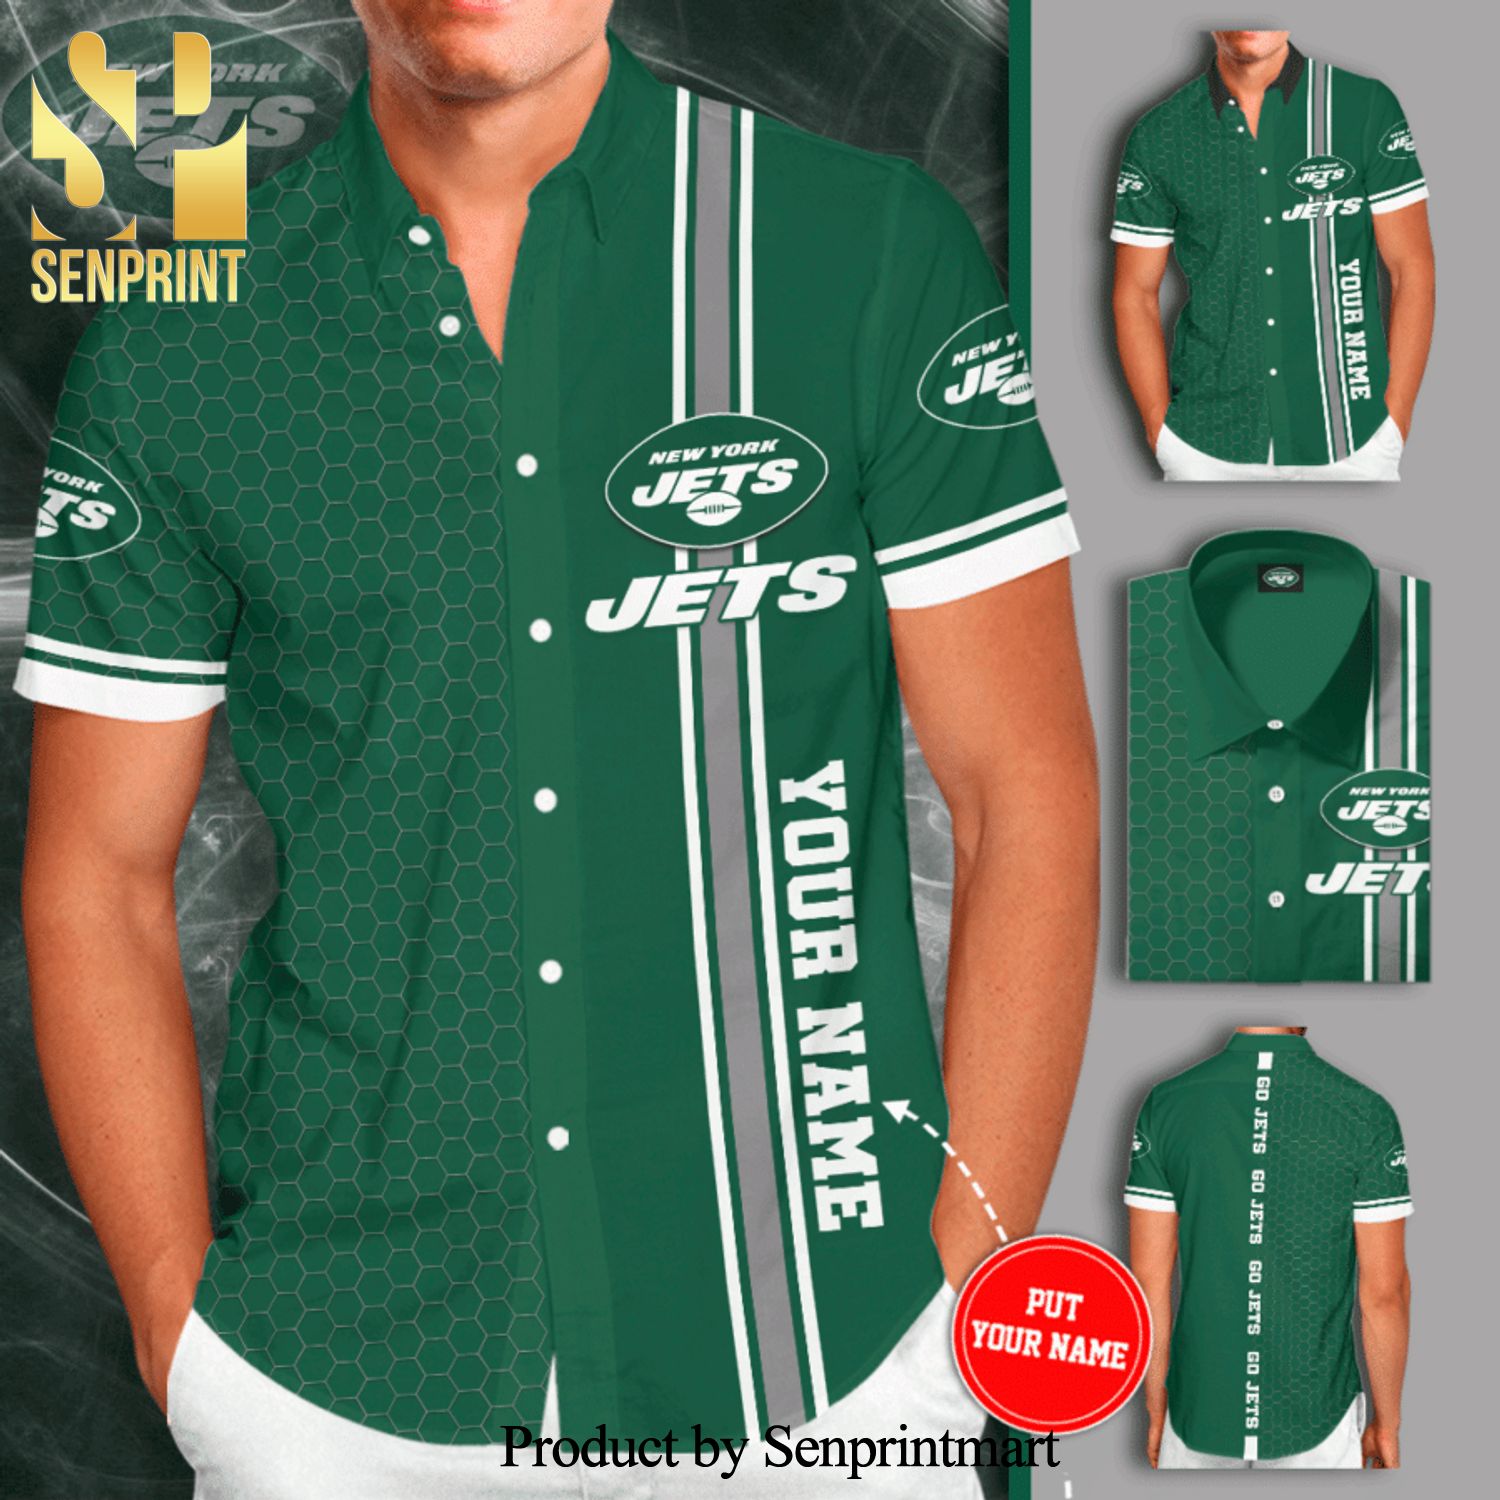 Personalized New York Jets Go Jets Full Printing Tiling Short Sleeve Dress Shirt Hawaiian Summer Aloha Beach Shirt – Green